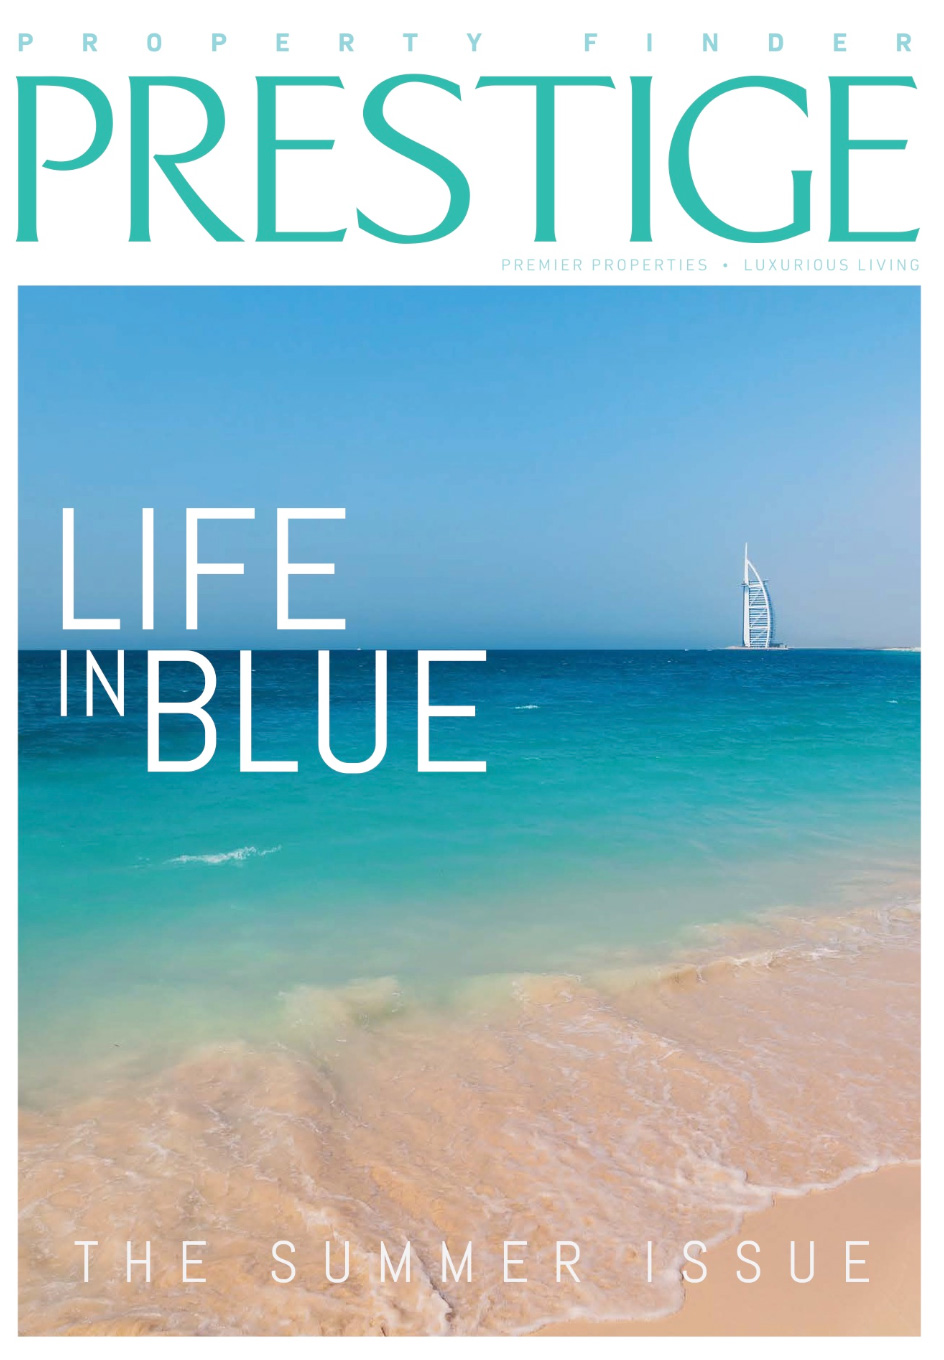 prestige issue 41